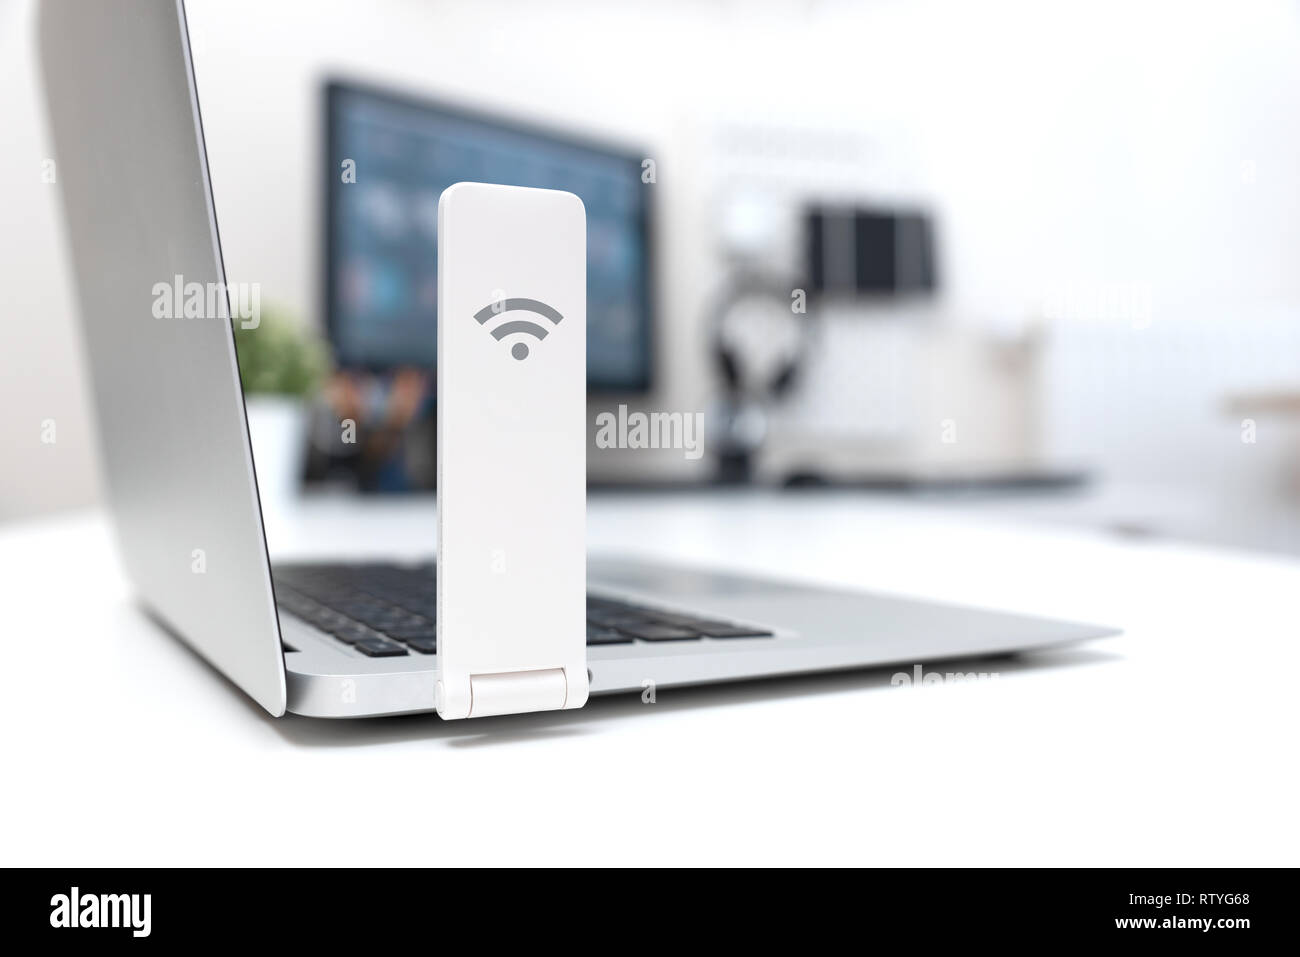 Accesso wireless a internet concetto. Rete mobile expander o mobile internet modem USB stick Foto Stock